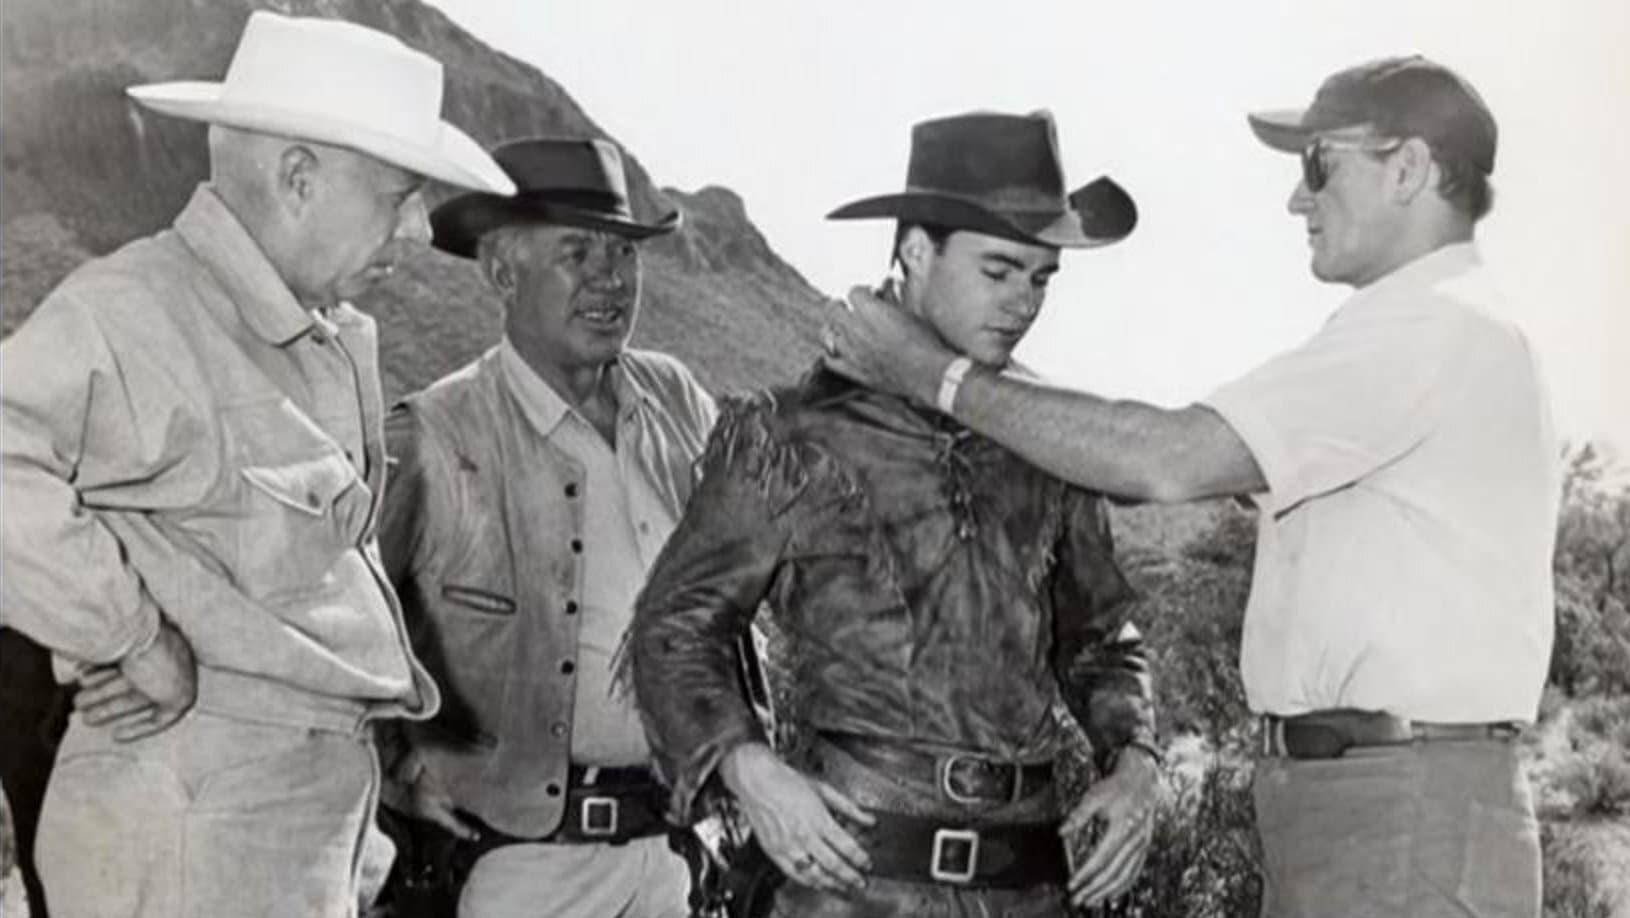 Commemoration: Howard Hawks' 'Rio Bravo' backdrop